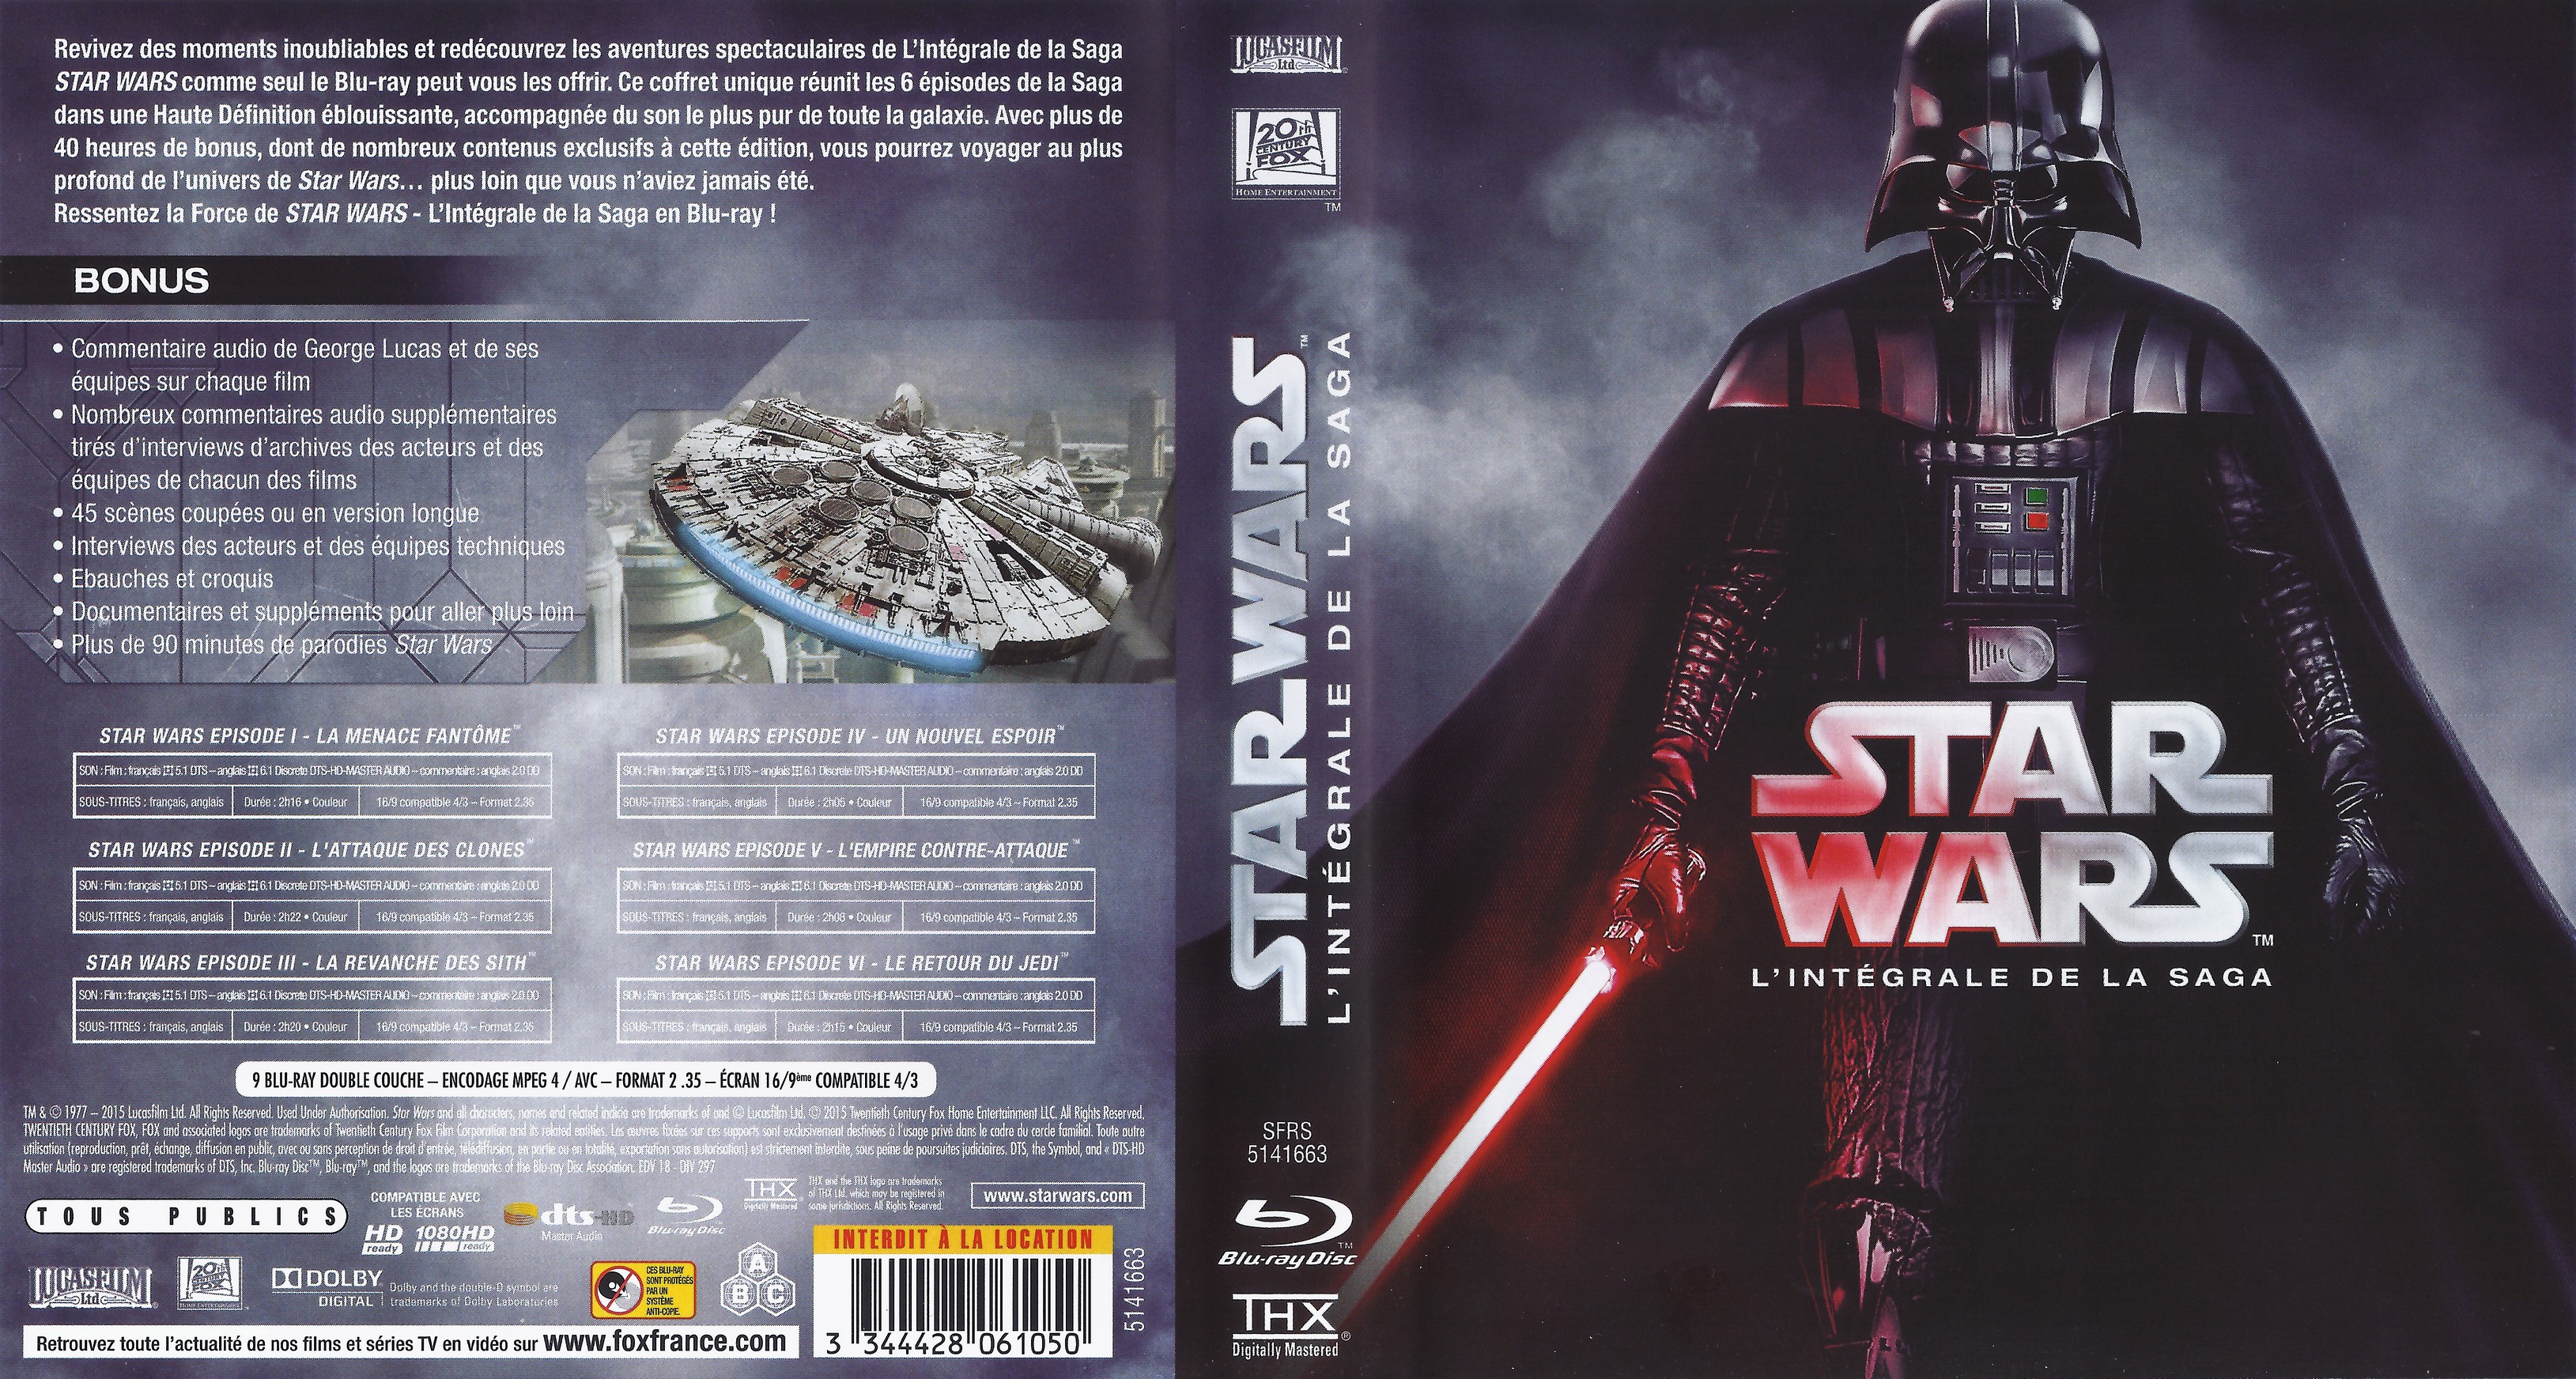 Jaquette DVD Star Wars Intgrale COFFRET (BLU-RAY)